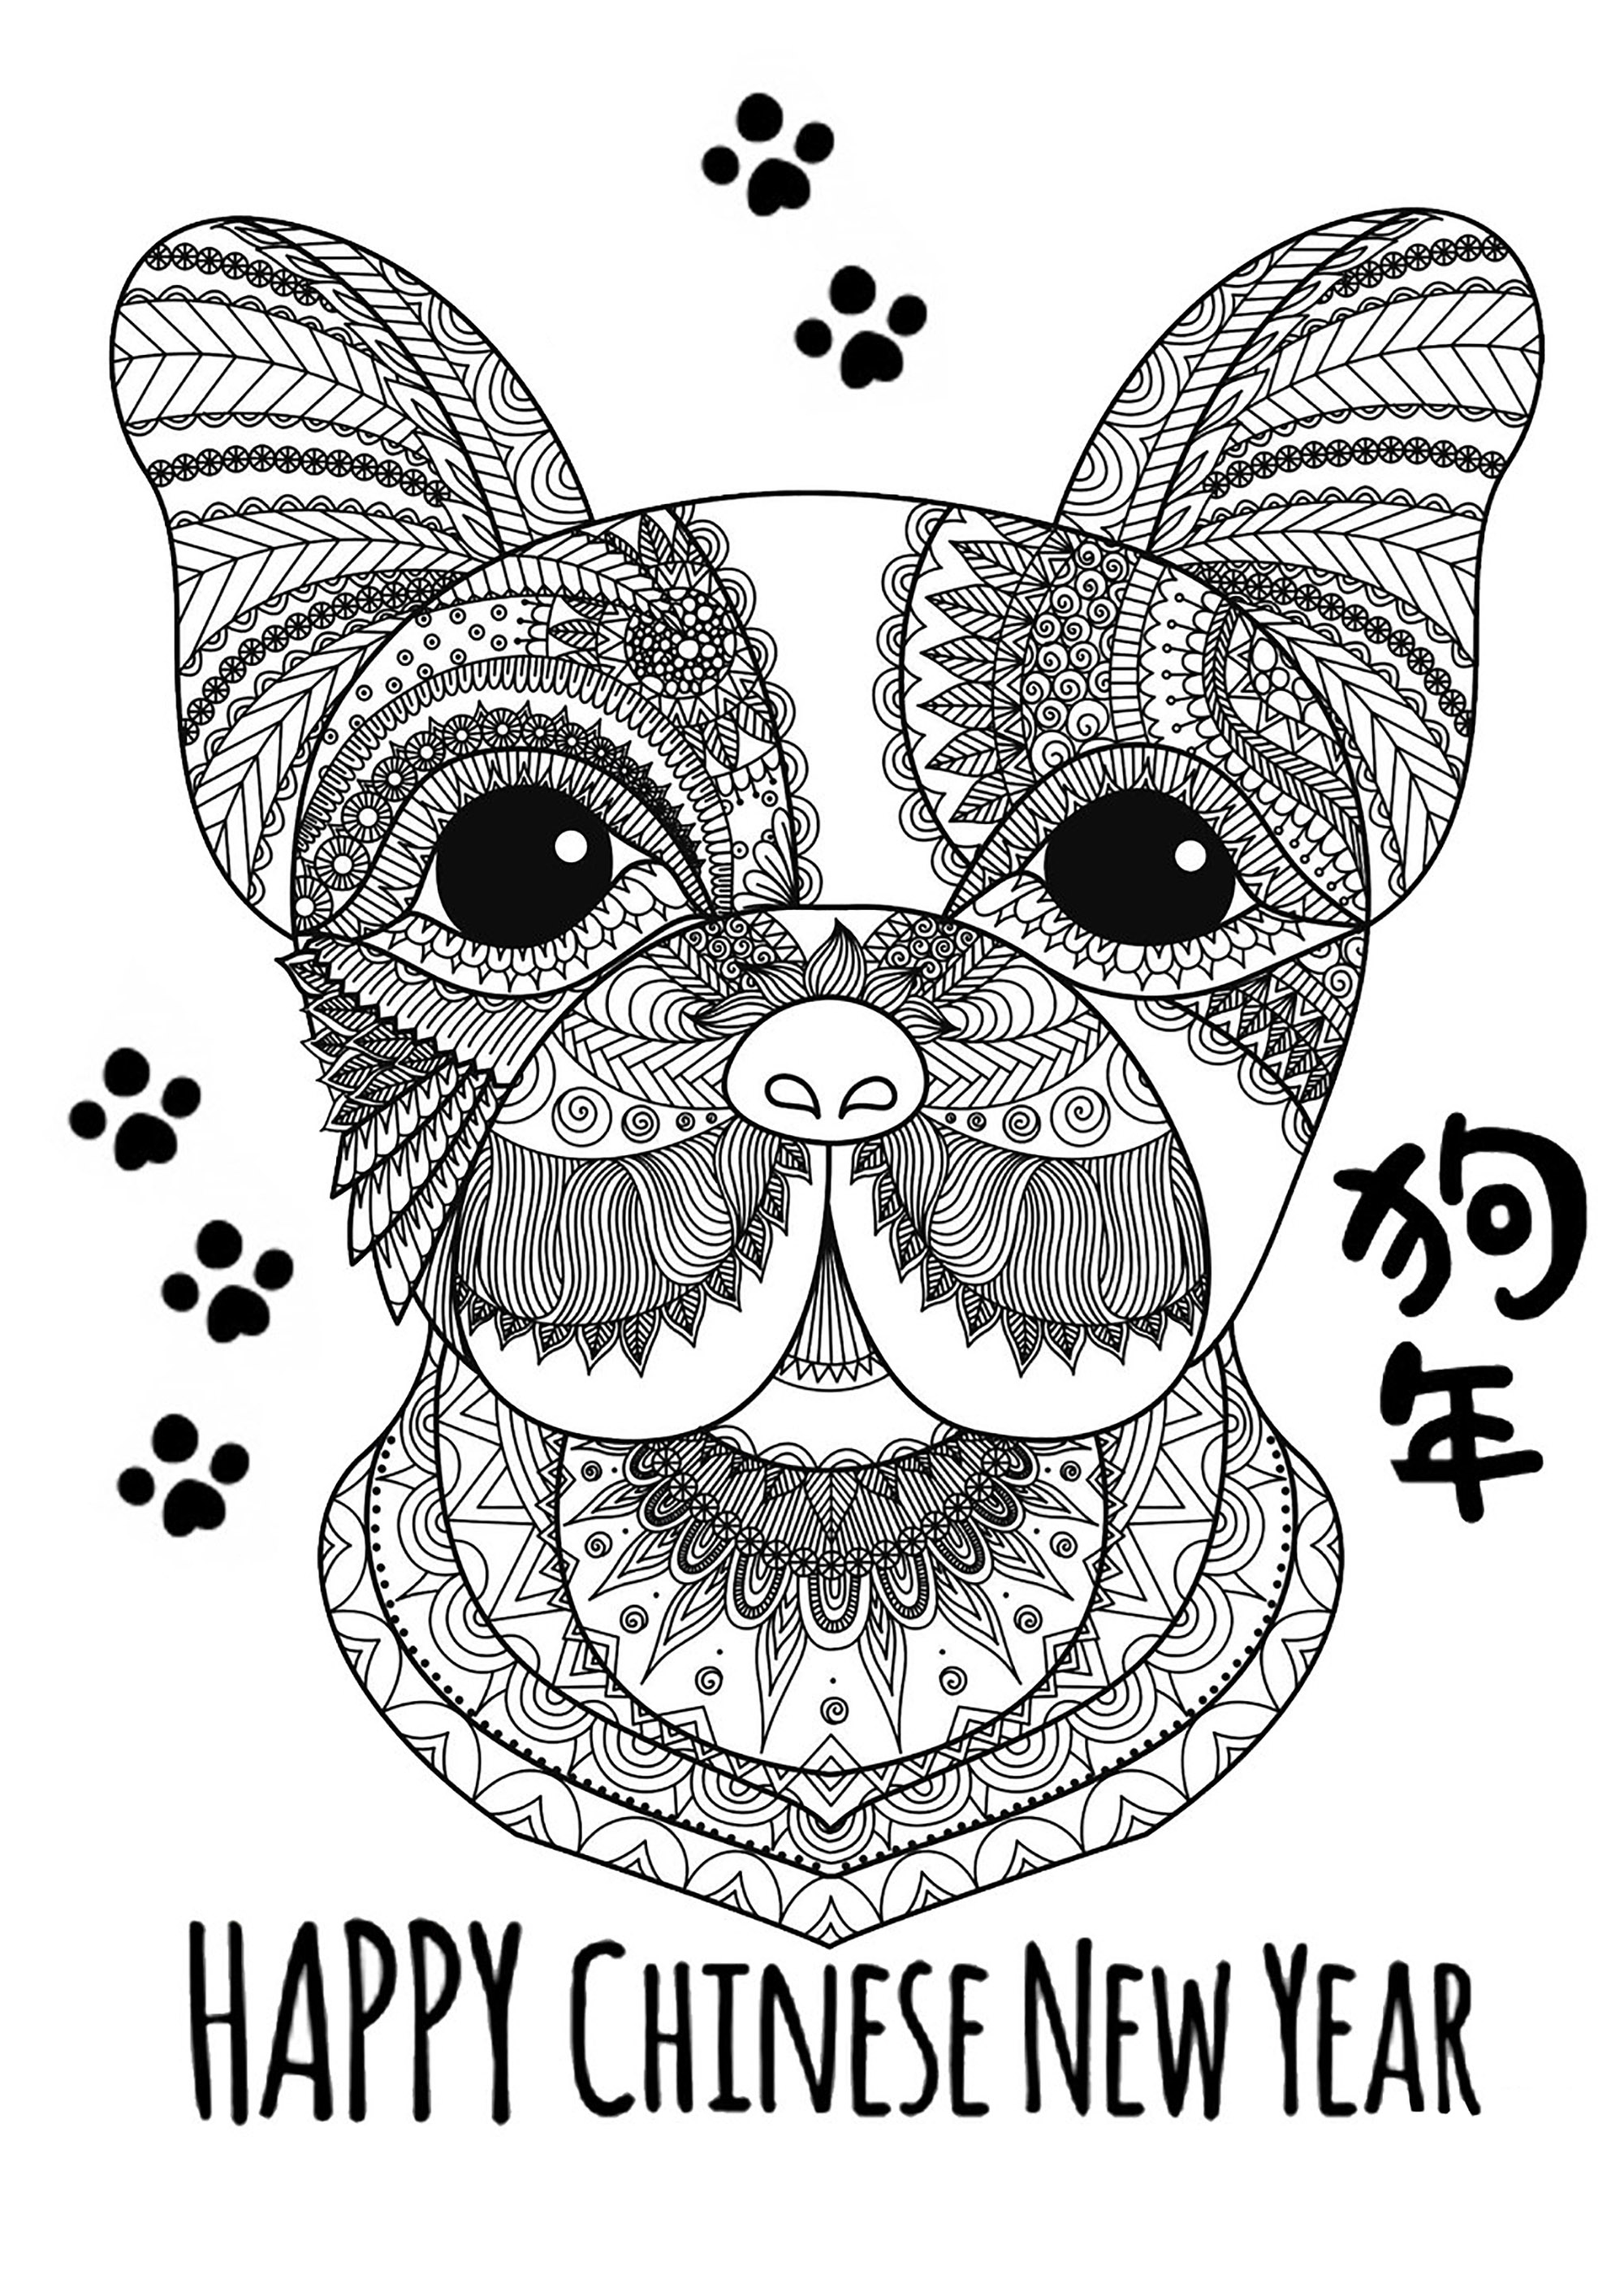 Feliz Ano Novo Chinês ! (Ano do Cão), Artista : Bimdeedee   Fonte : 123rf